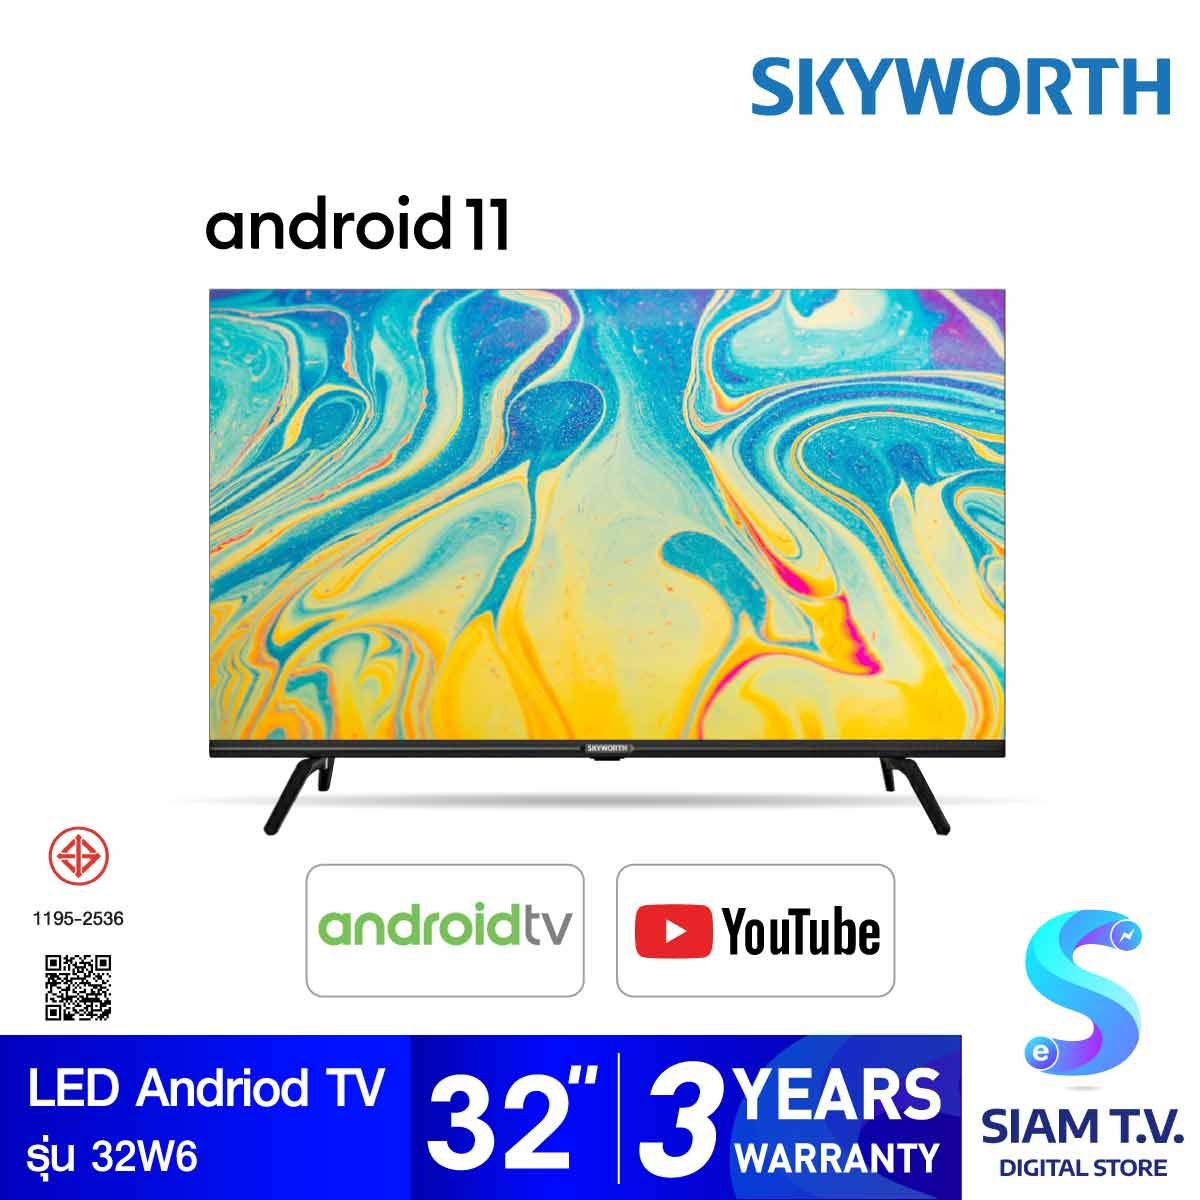 SKYWORTH LED Android TV รุ่น 32W6 Android 11 สมาร์ททีวี 32 นิ้ว จอไร้ขอบ